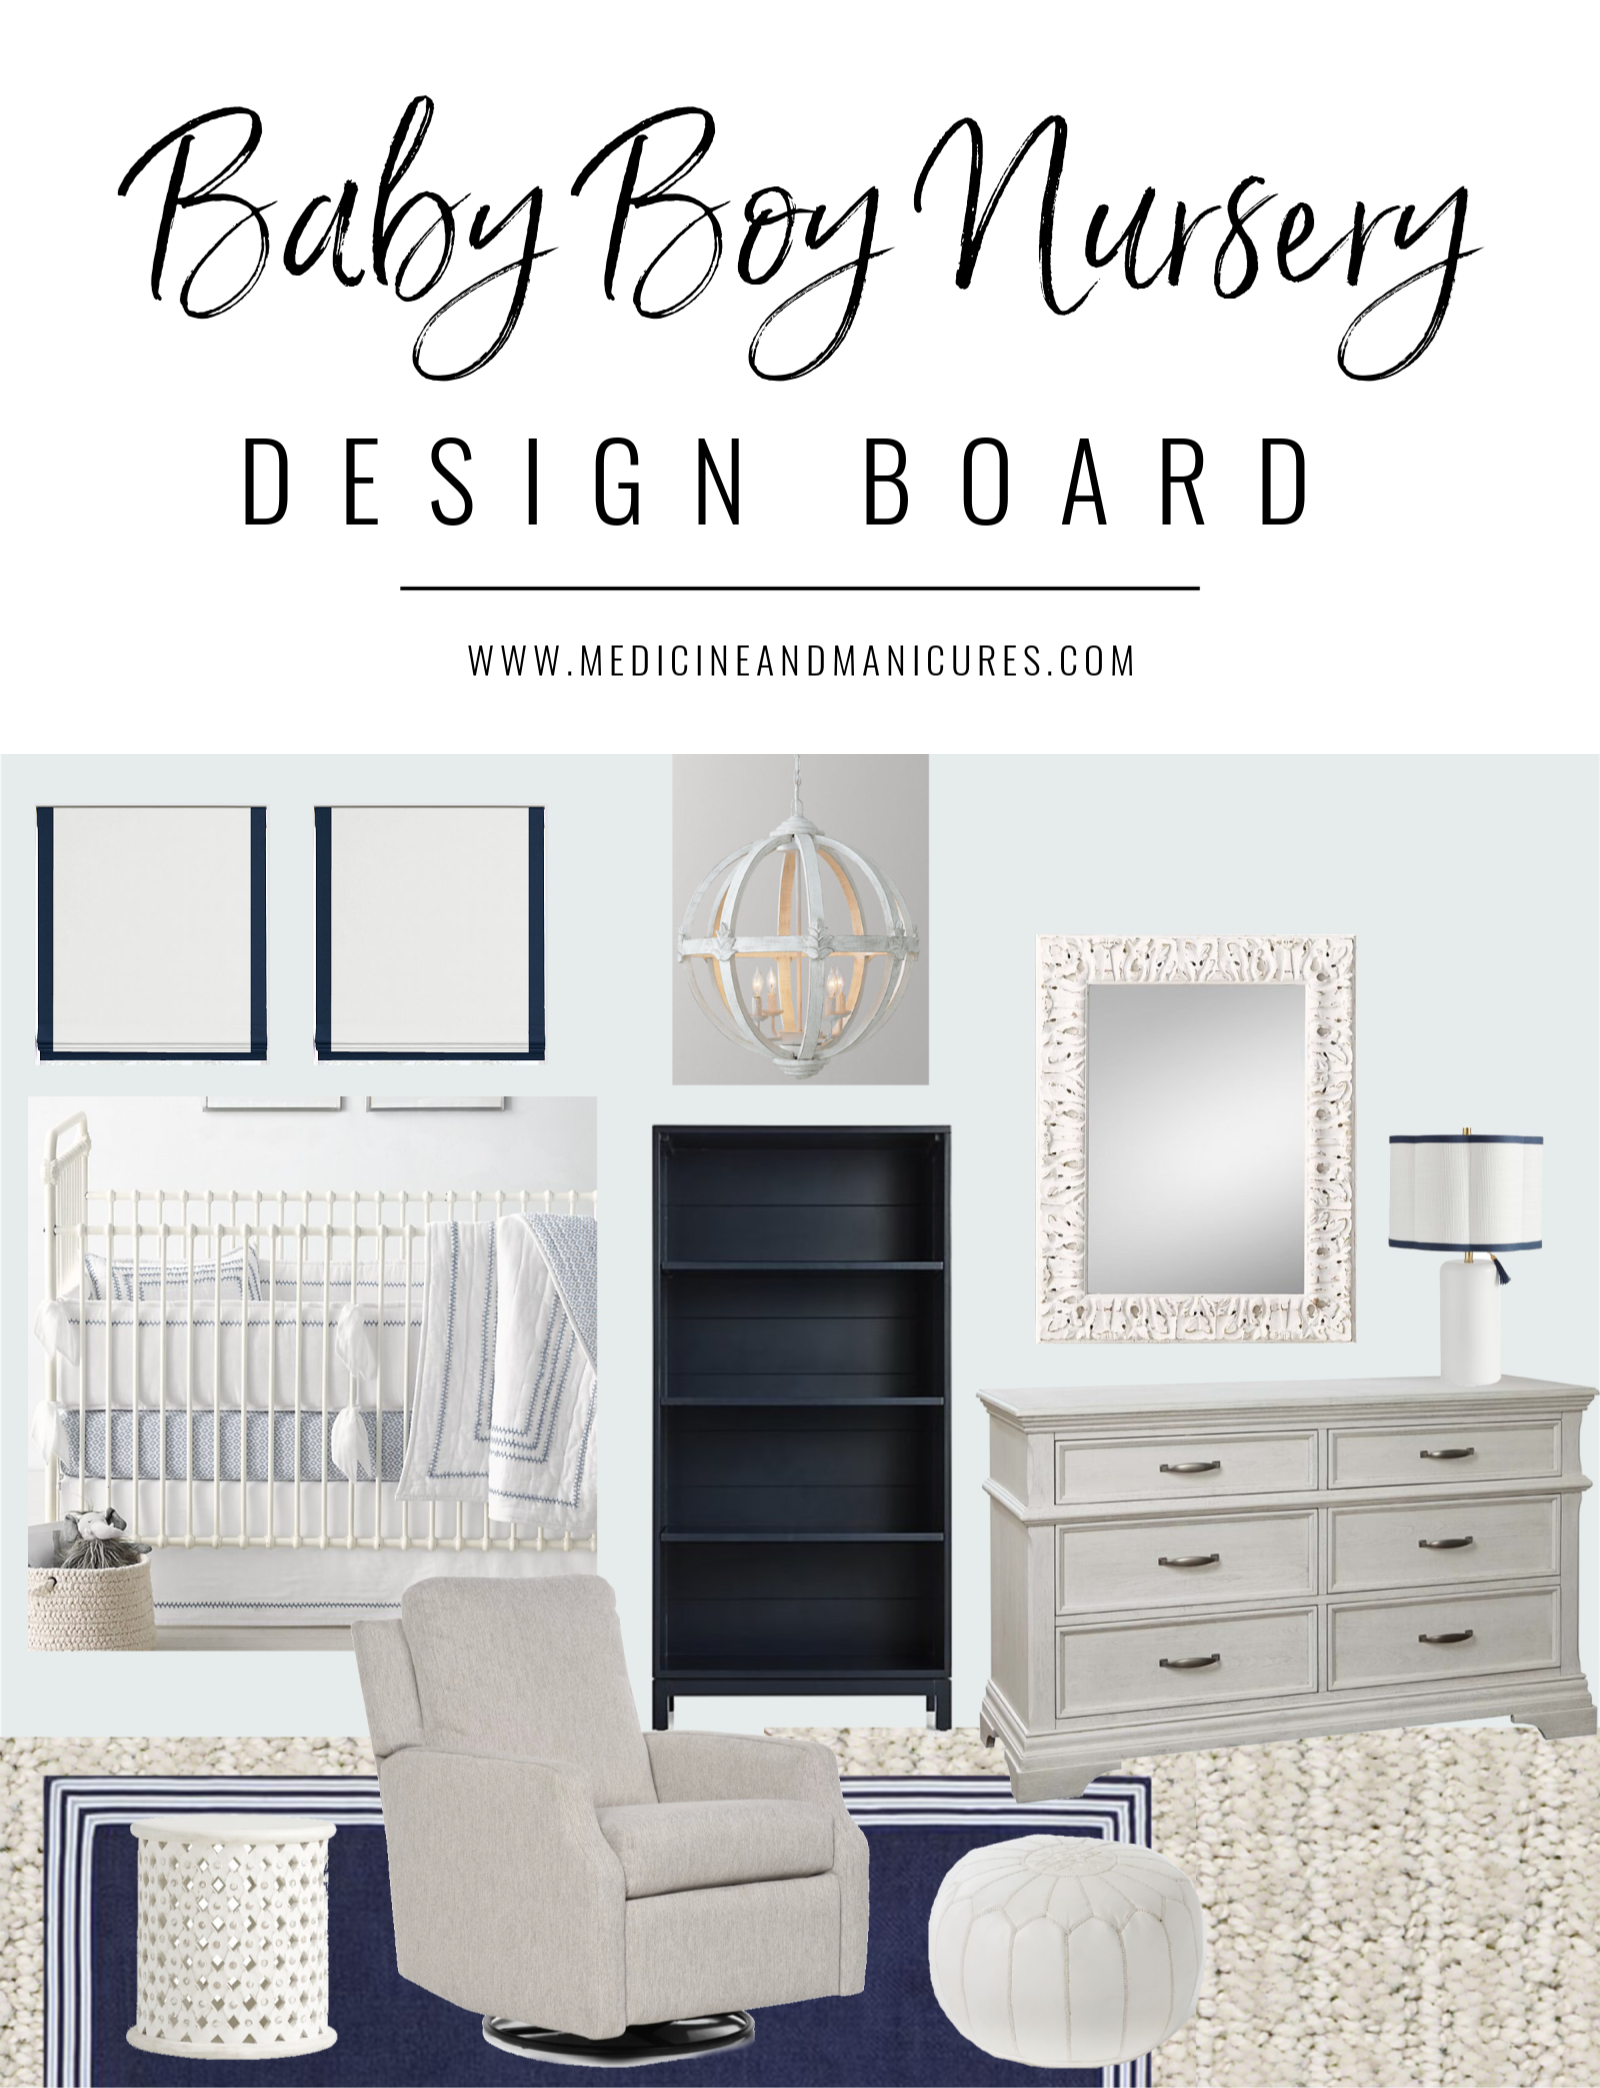 boy nursery design board